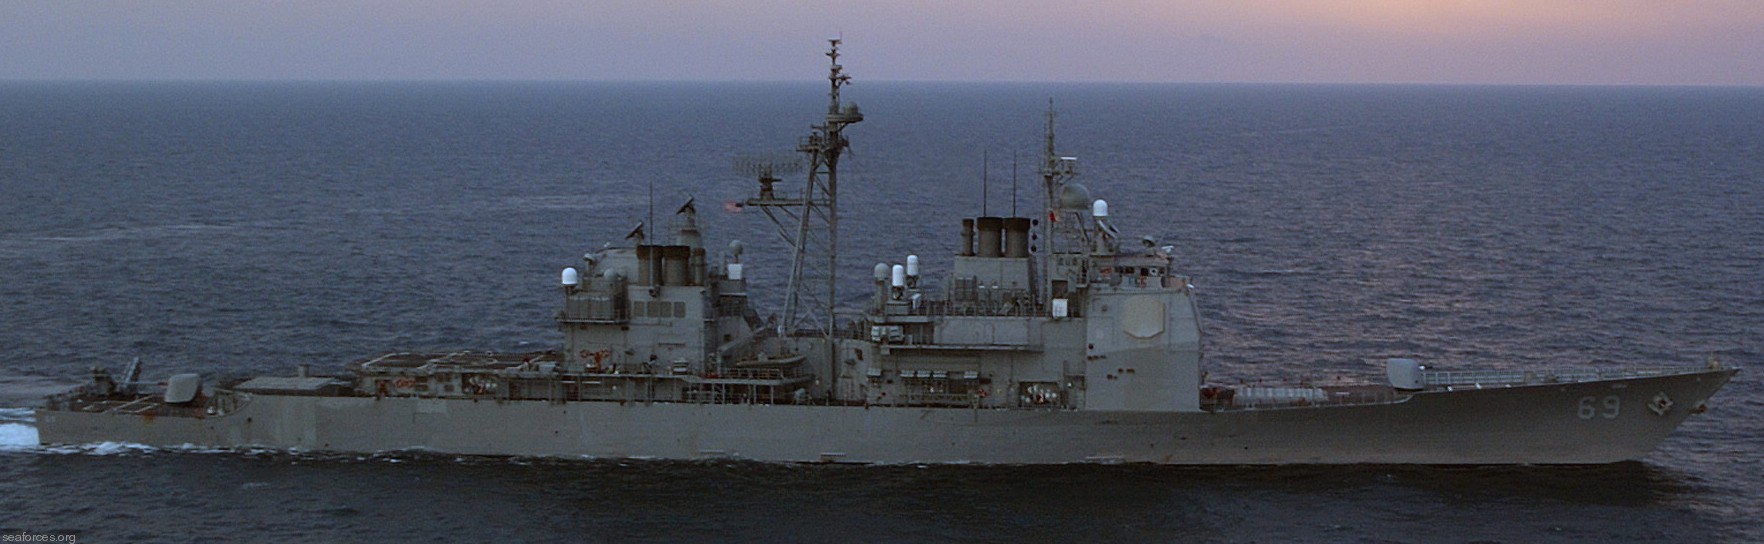 cg-69 uss vicksburg ticonderoga class guided missile cruiser us navy 39